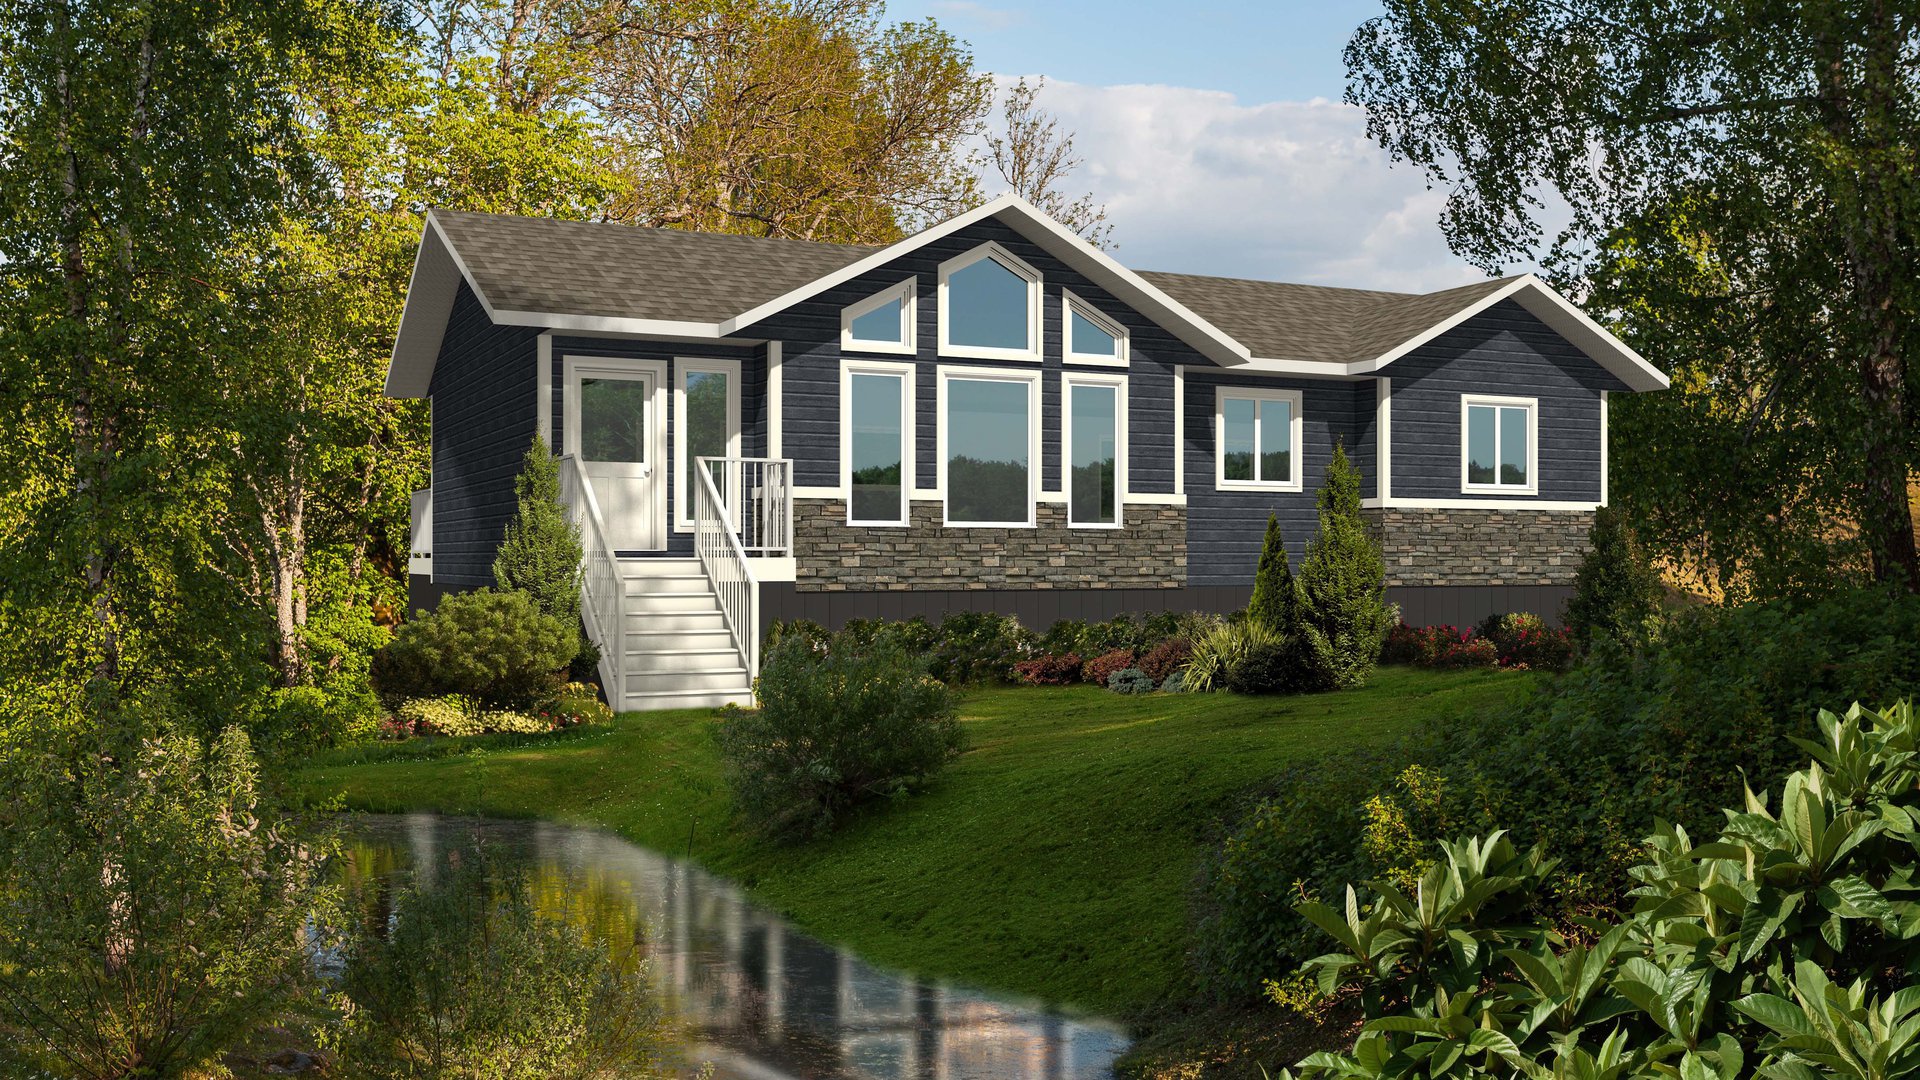 Blue_Ridge prefab homes modular homes house plans nelson homes USA.jpg